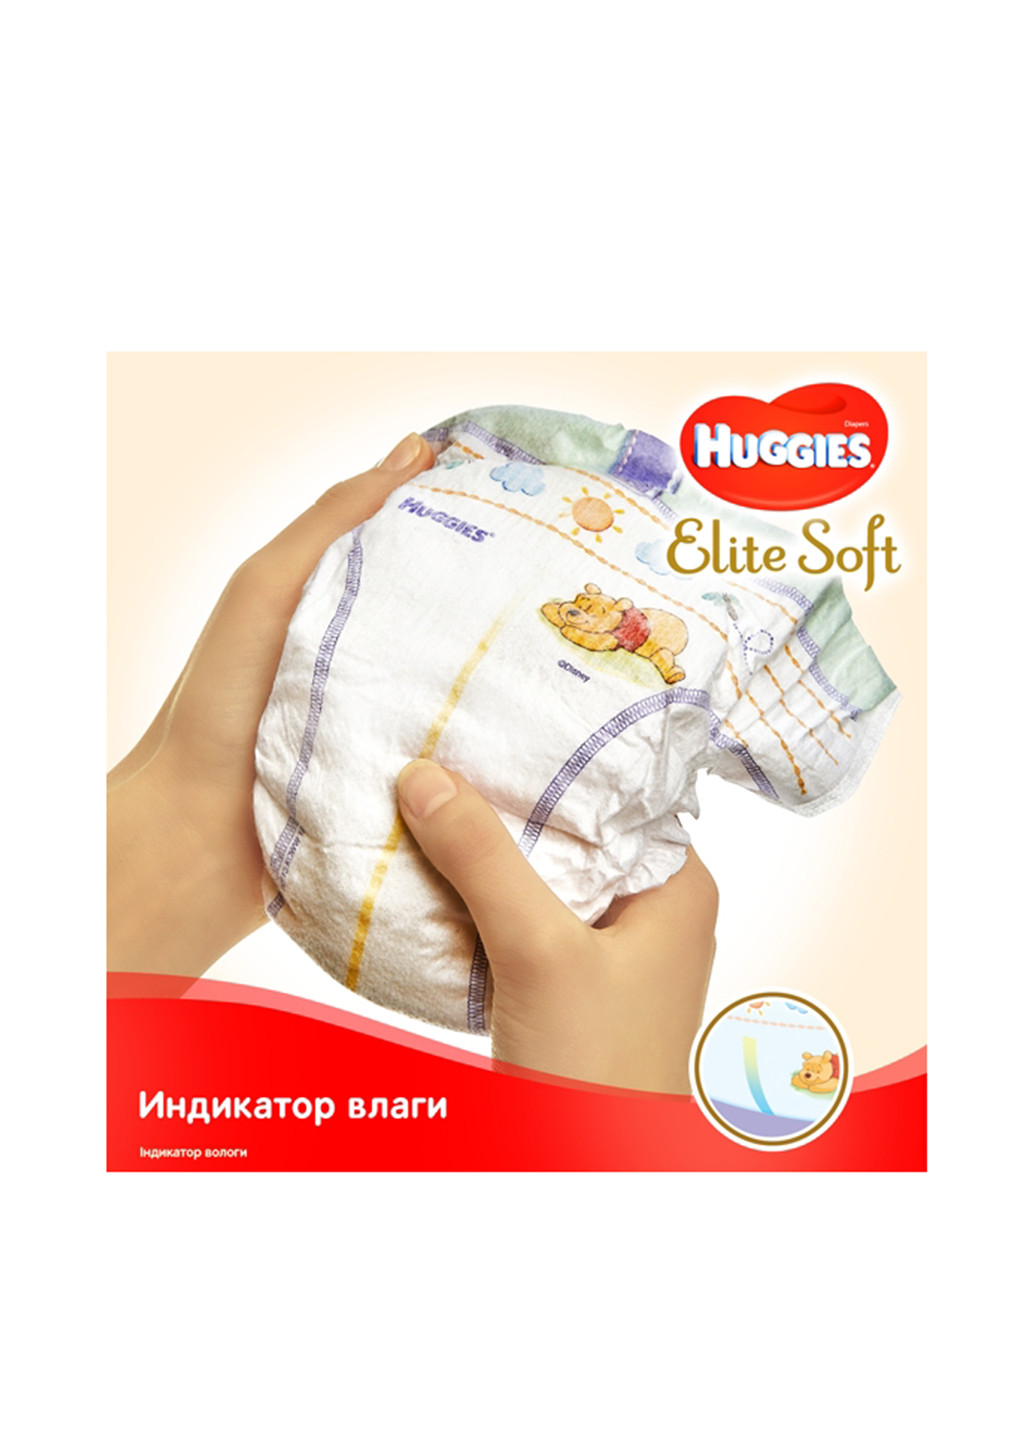 Підгузки Elite Soft Newborn 1 (3-5 кг), (84 шт.) Huggies (130948238)